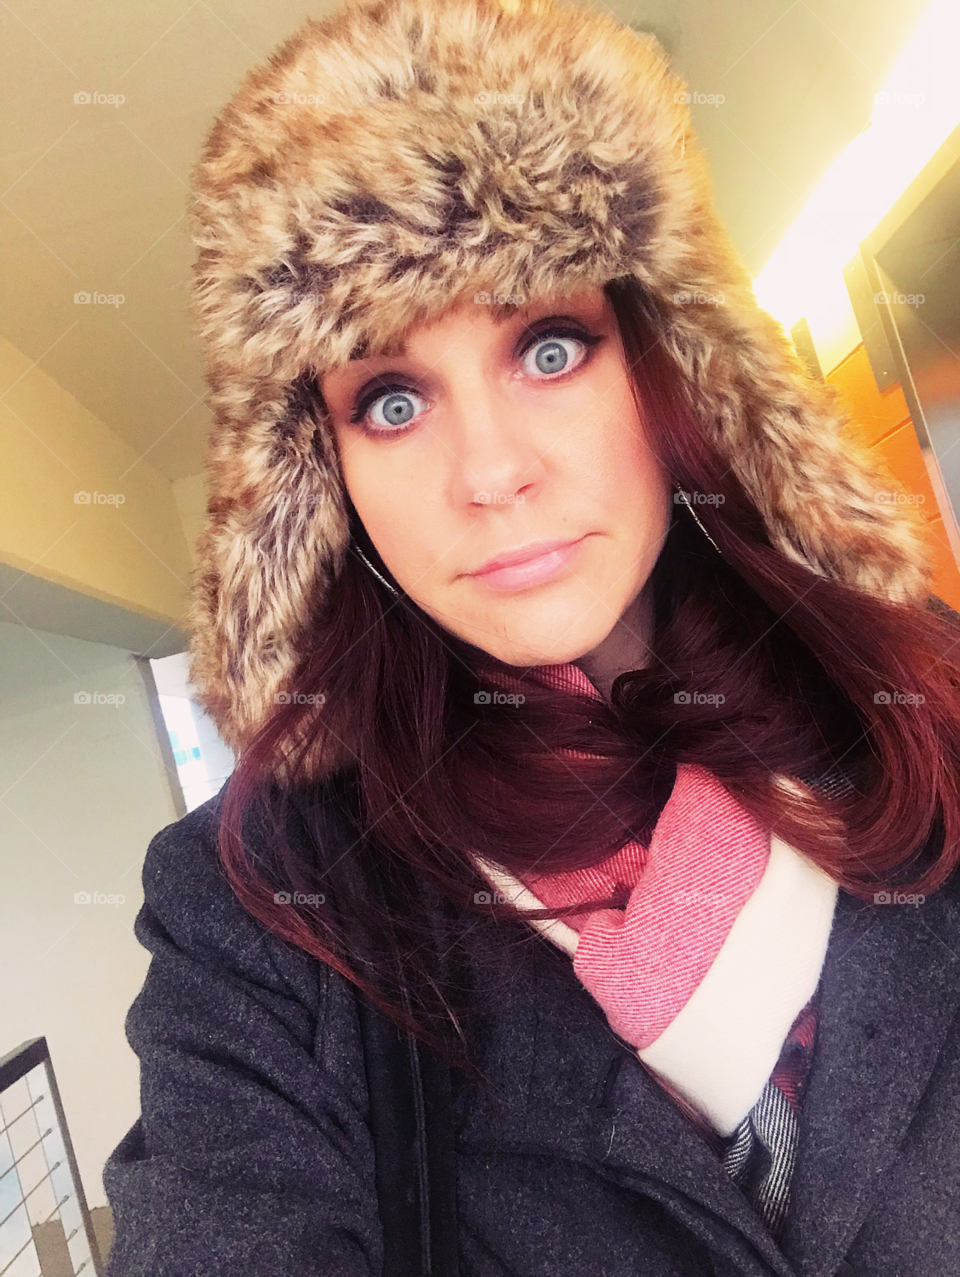 Cold winter warm hat